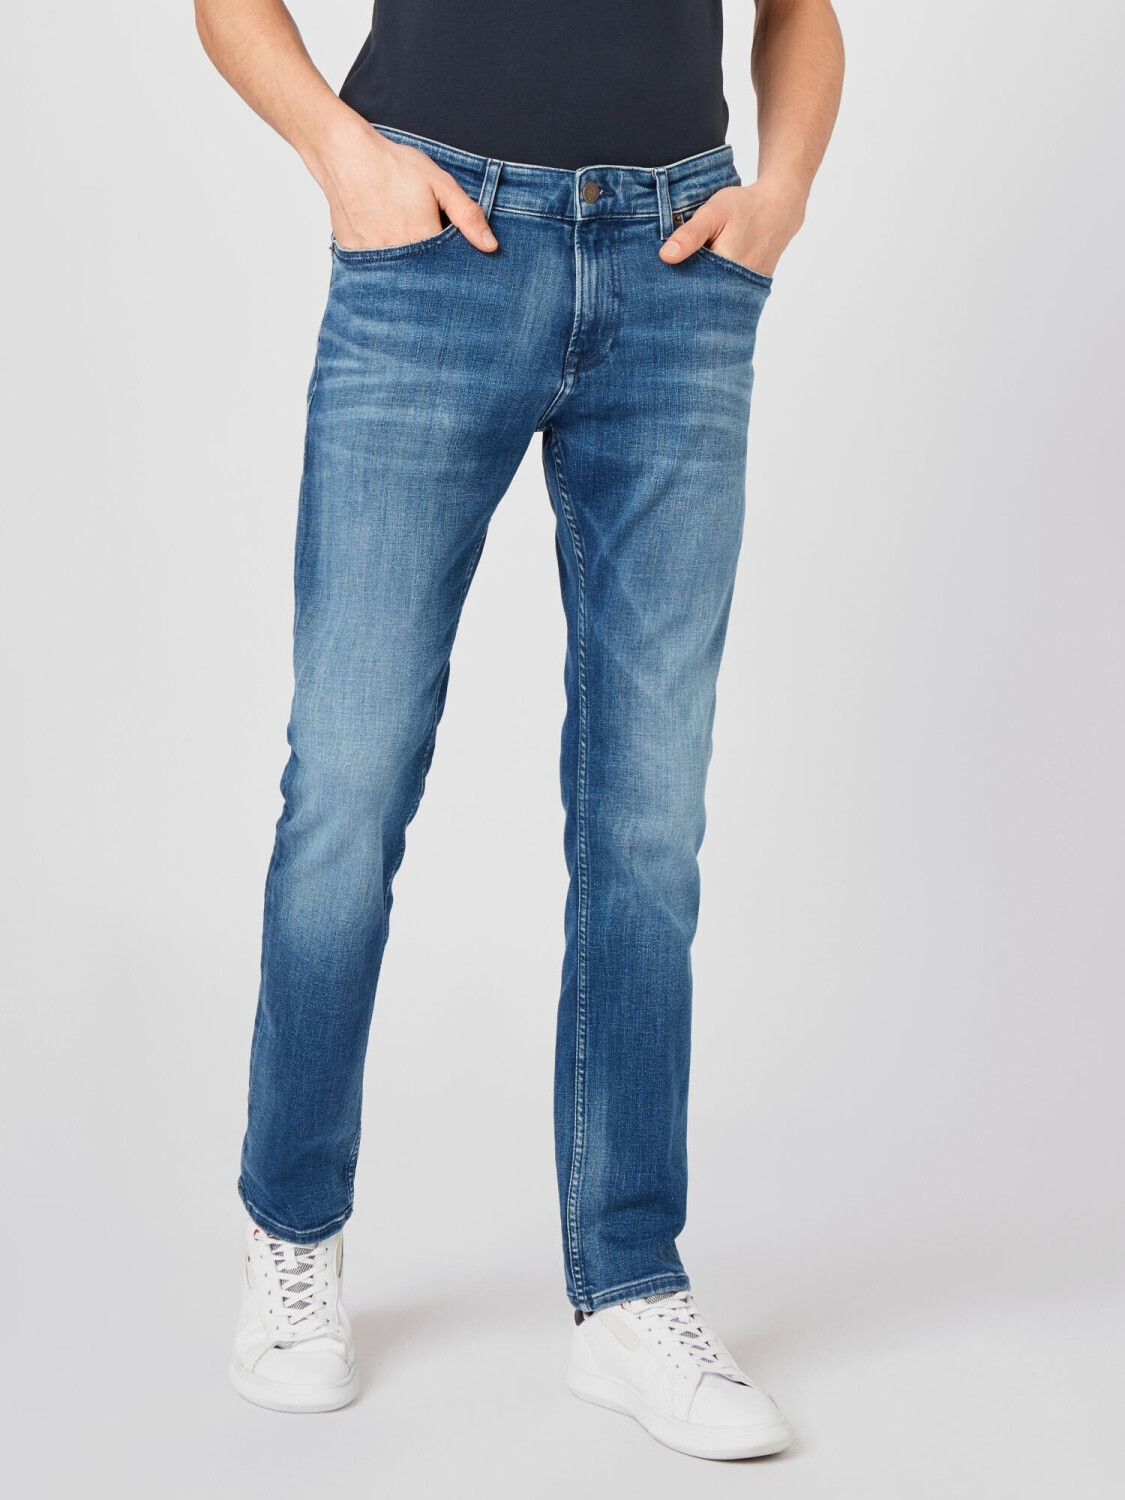 Buy Tommy Hilfiger Scanton Slim Fit Jeans dynamic jacob mid blue ...